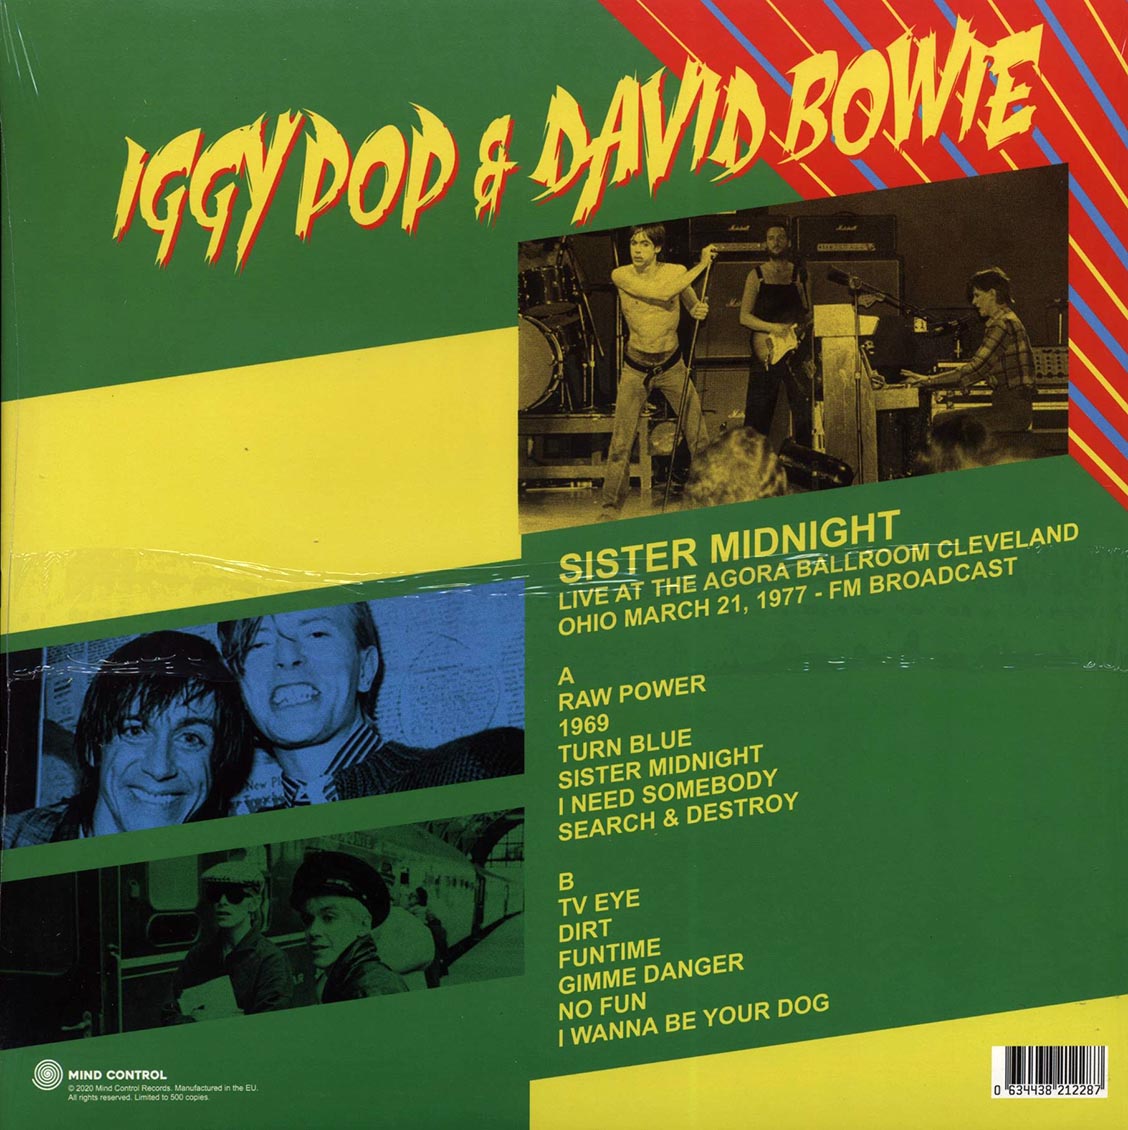 Iggy Pop, David Bowie - Sister Midnight: Live At The Agora Ballroom Cleveland Ohio March 21, 1977 FM Broadcast (ltd. 500 copies made) (green vinyl) - Vinyl LP, LP